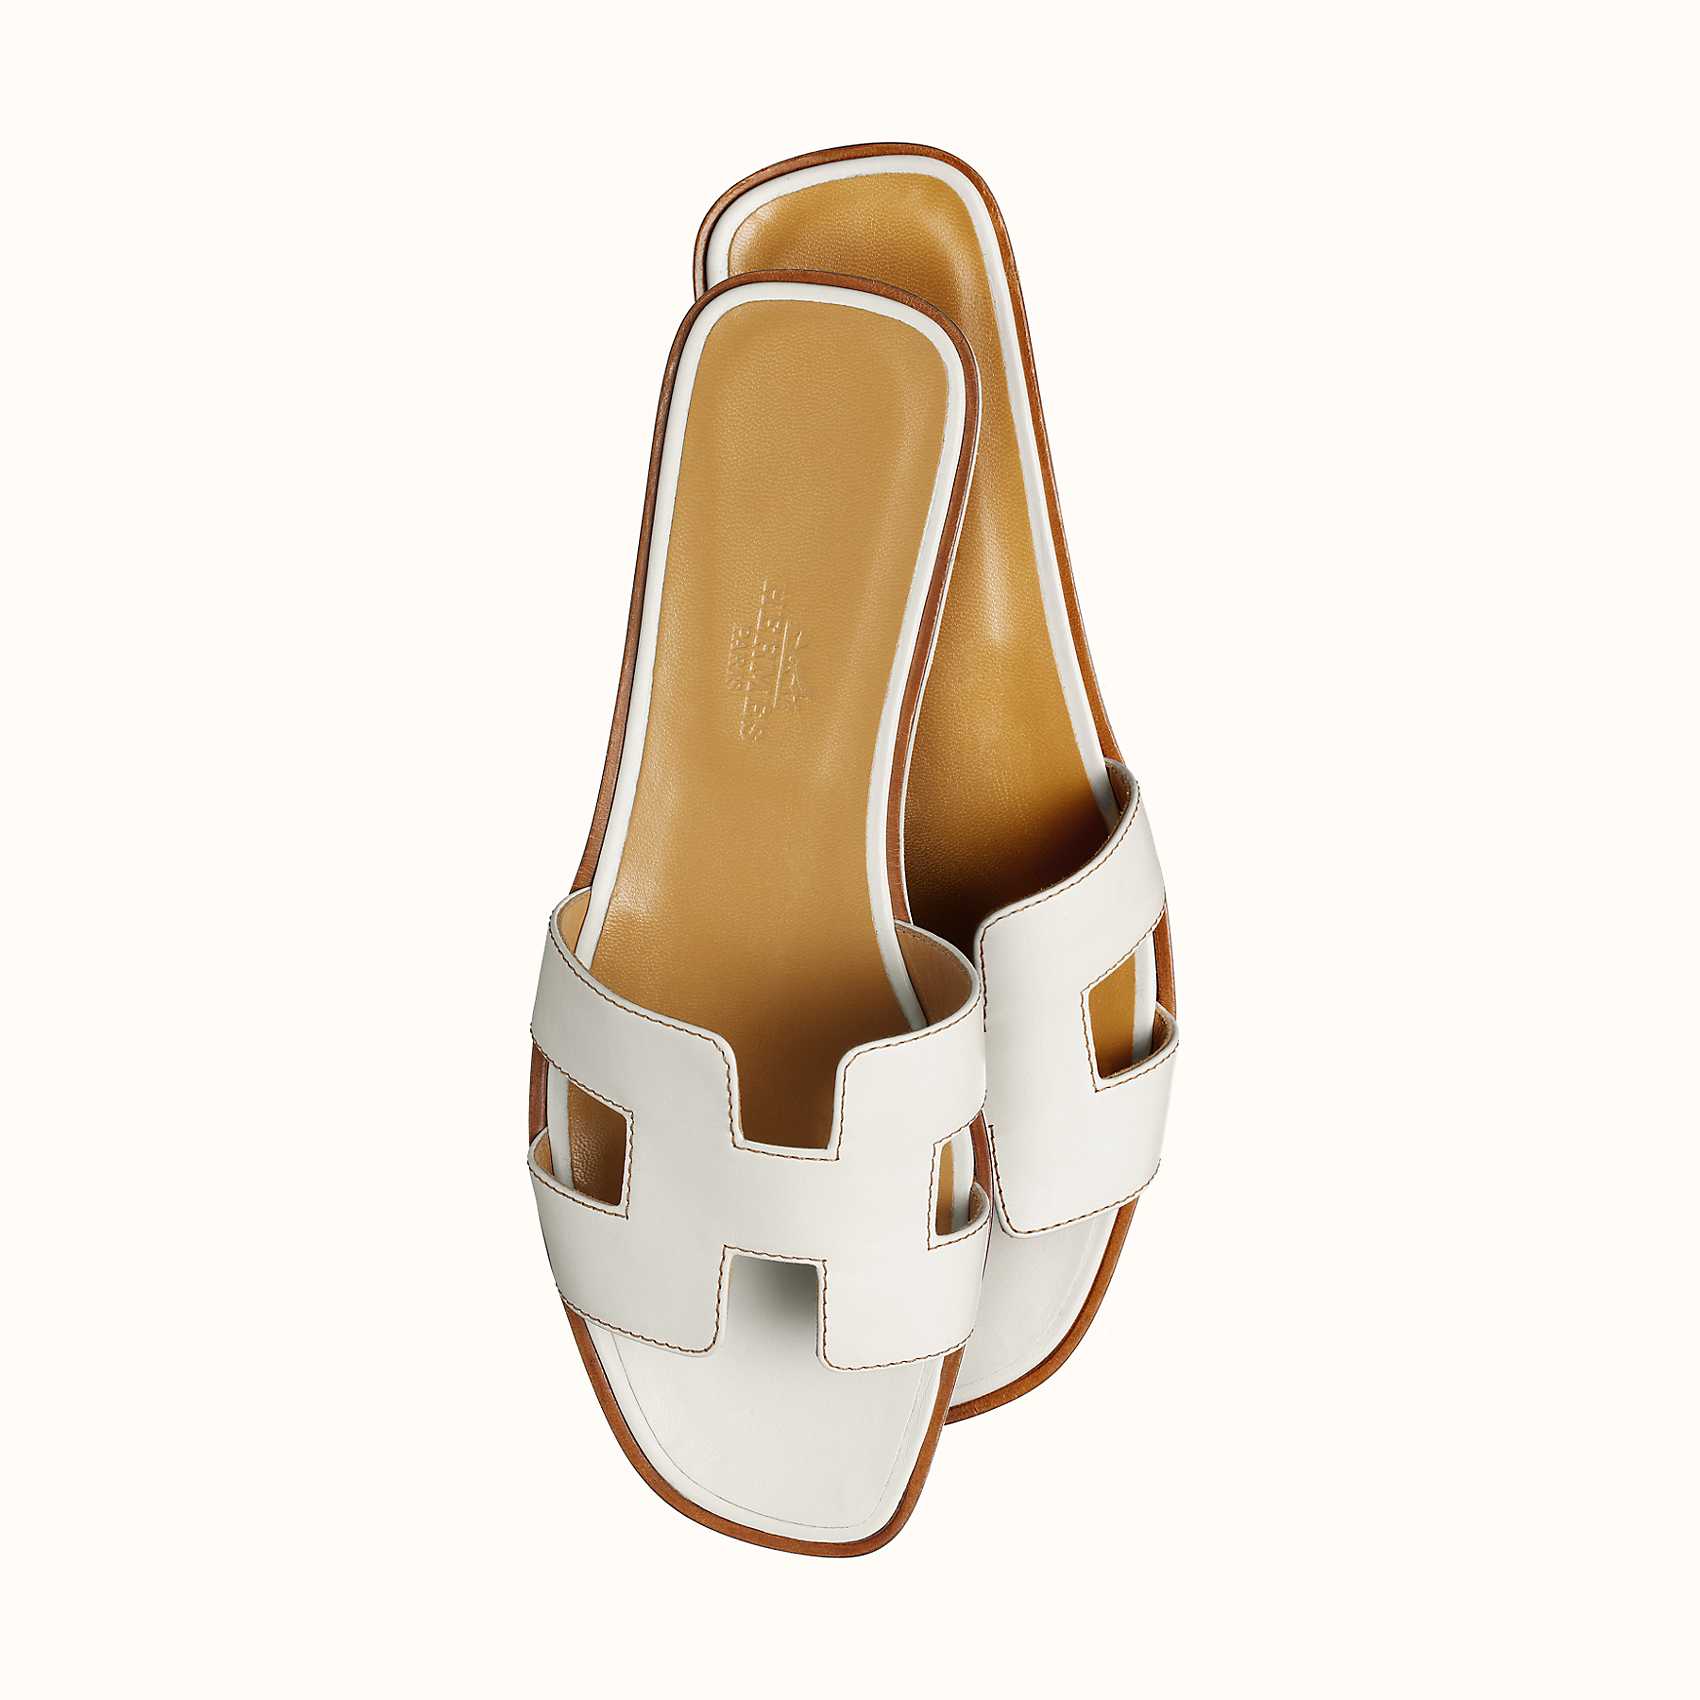 Brand New Hermes Oran Sandal - Noir Color - Size 39 | eBay